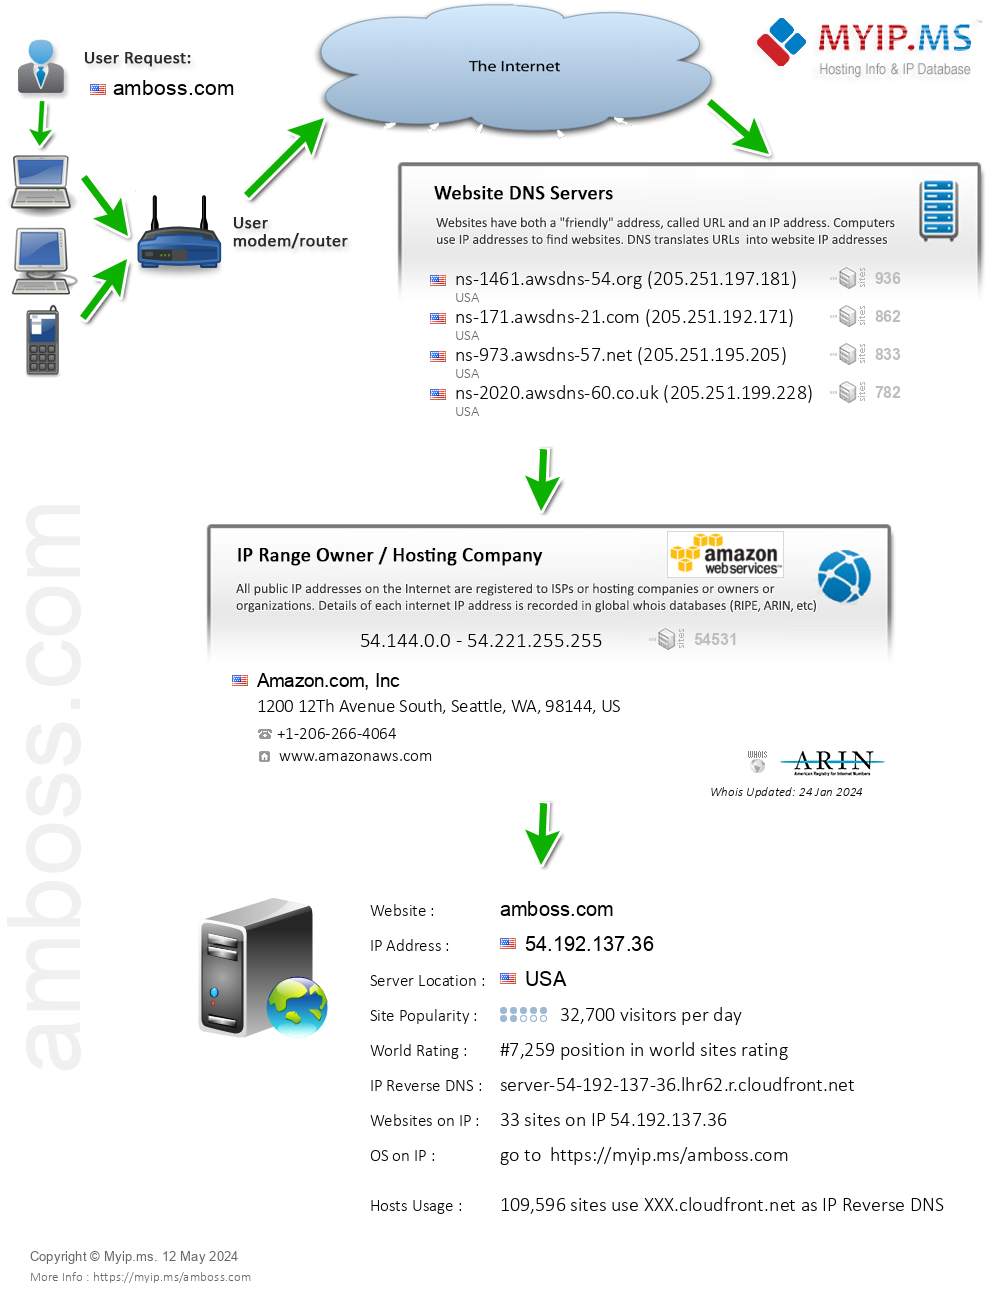 Amboss.com - Website Hosting Visual IP Diagram